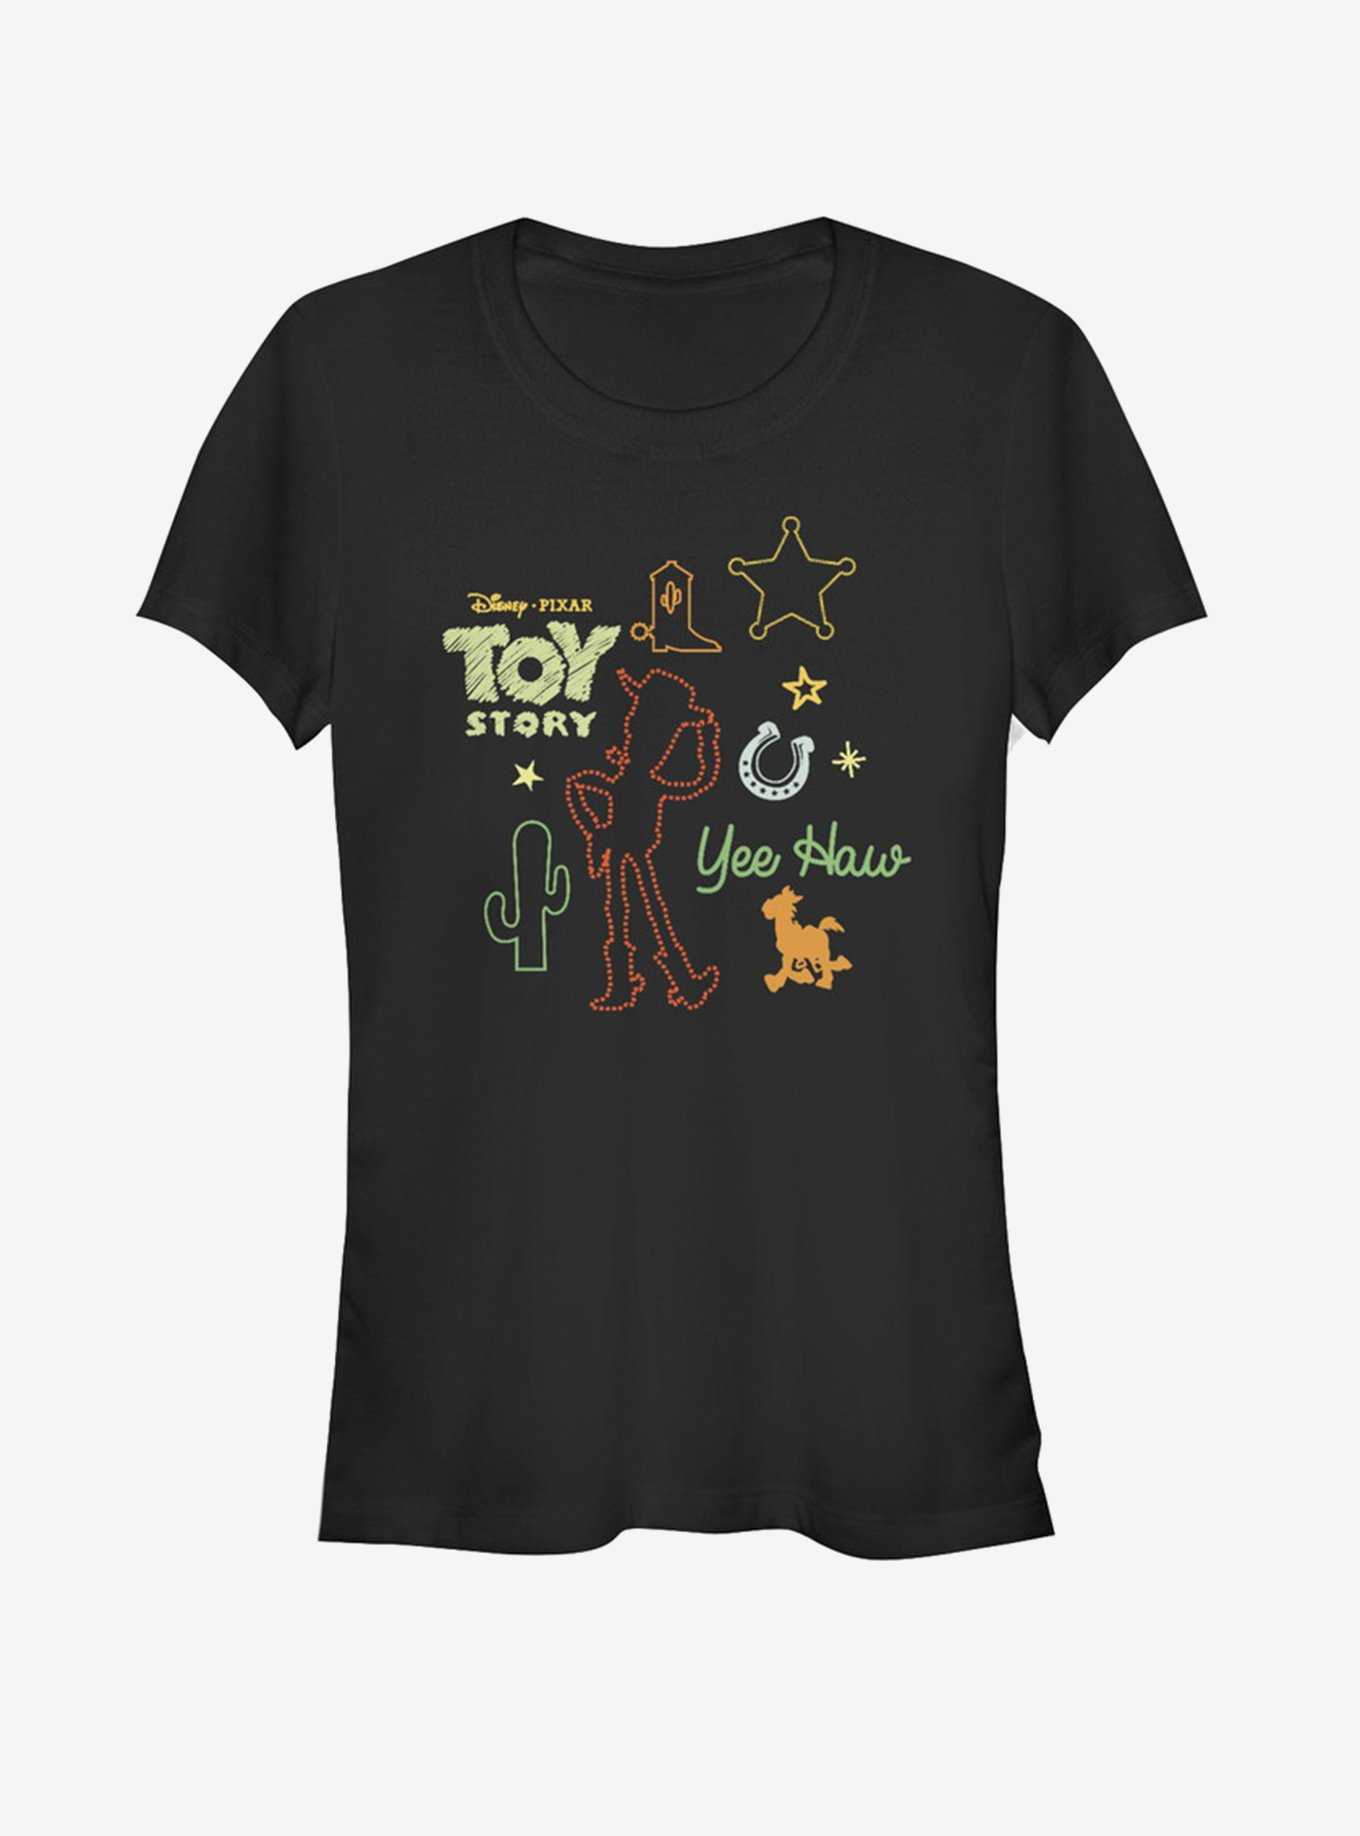 Disney Pixar Toy Story 4 Folk Story Girls T-Shirt, , hi-res